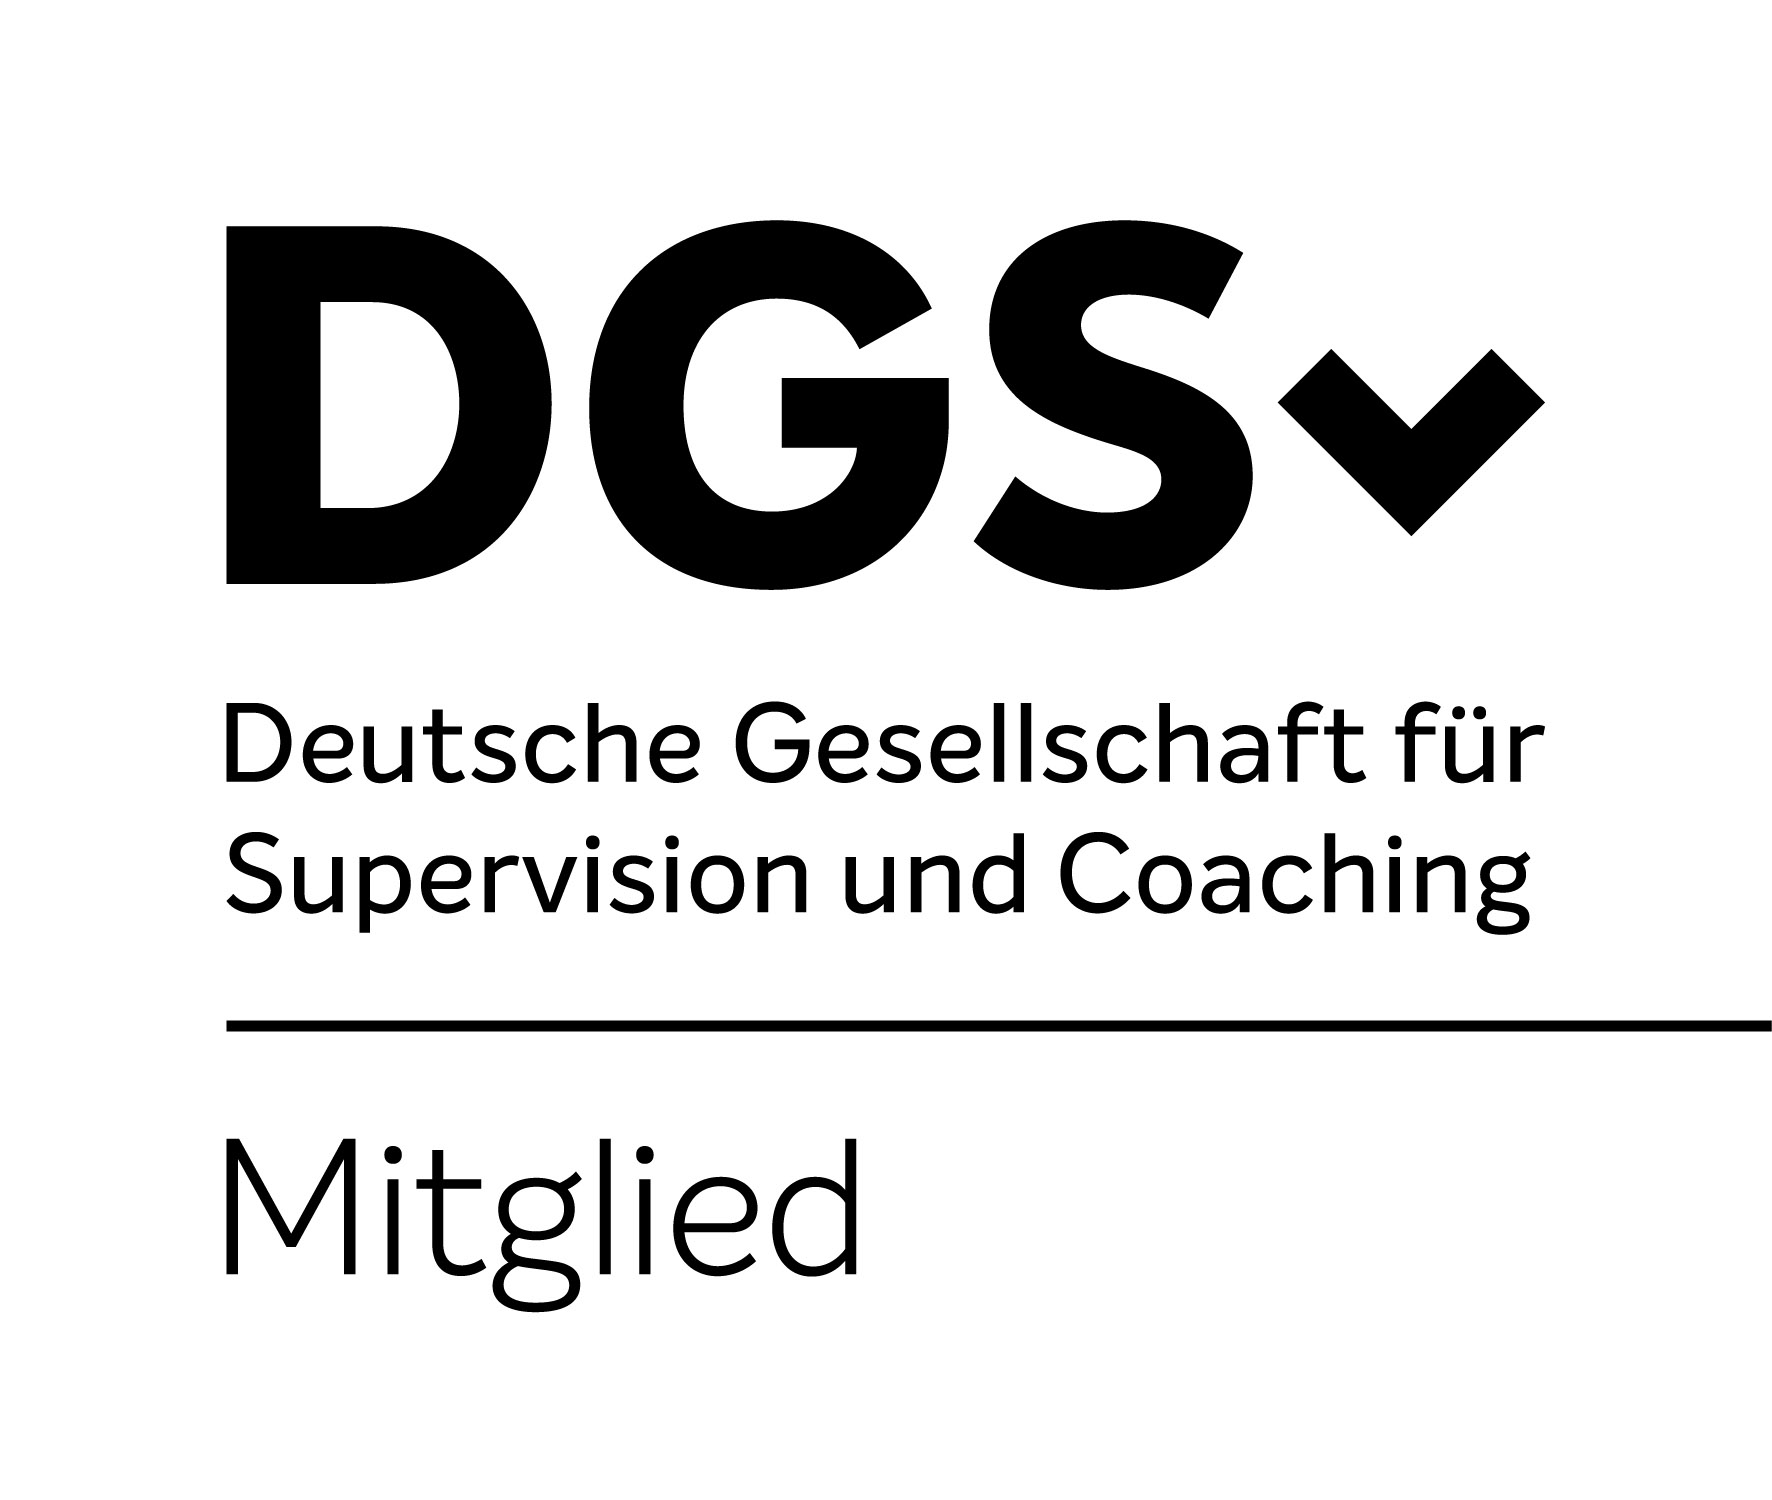 DGSv Logo Mitglieder CMYK white black